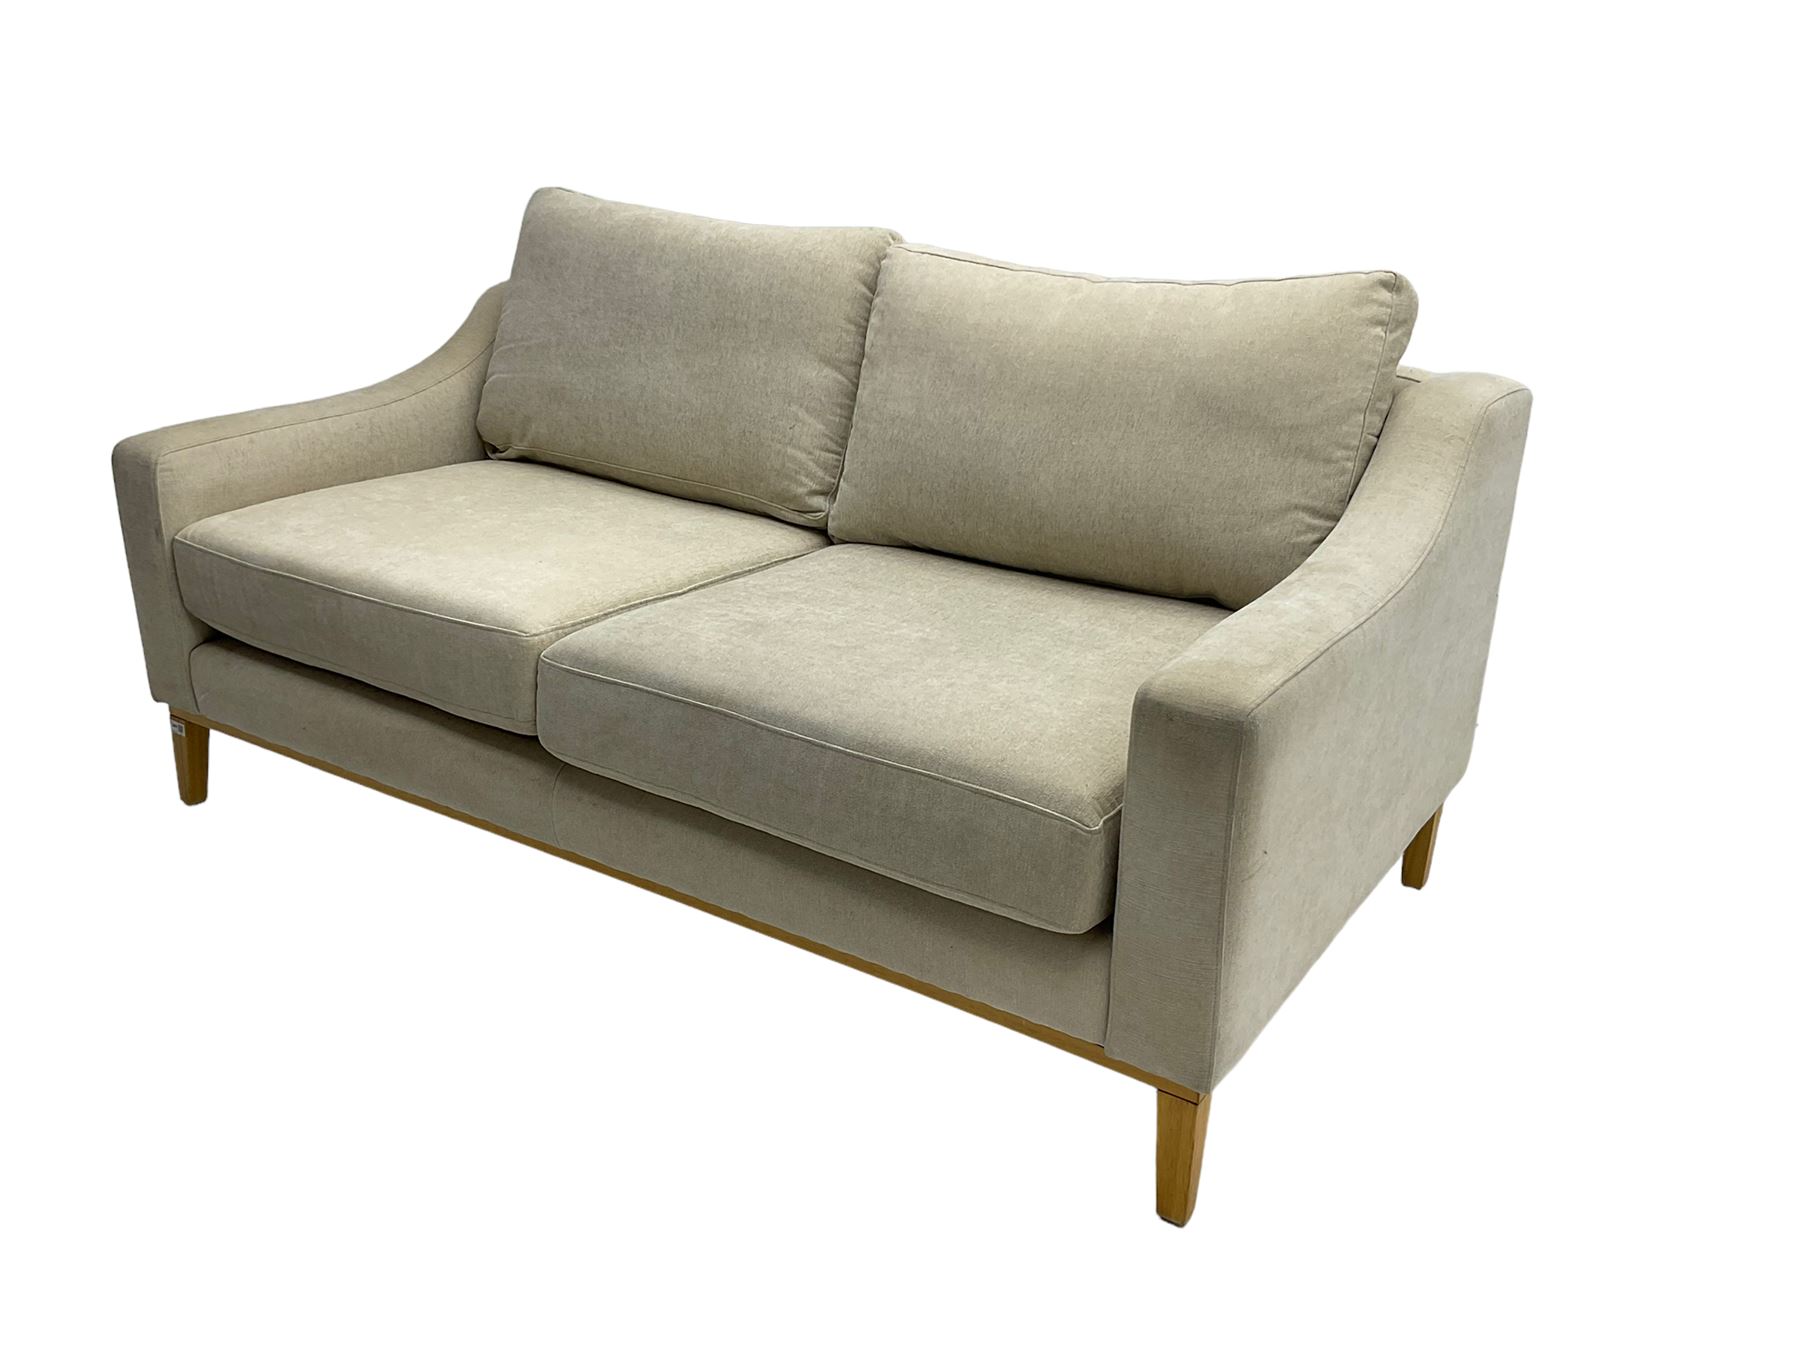 Noble & Jones - three seat sofa - Image 11 of 13